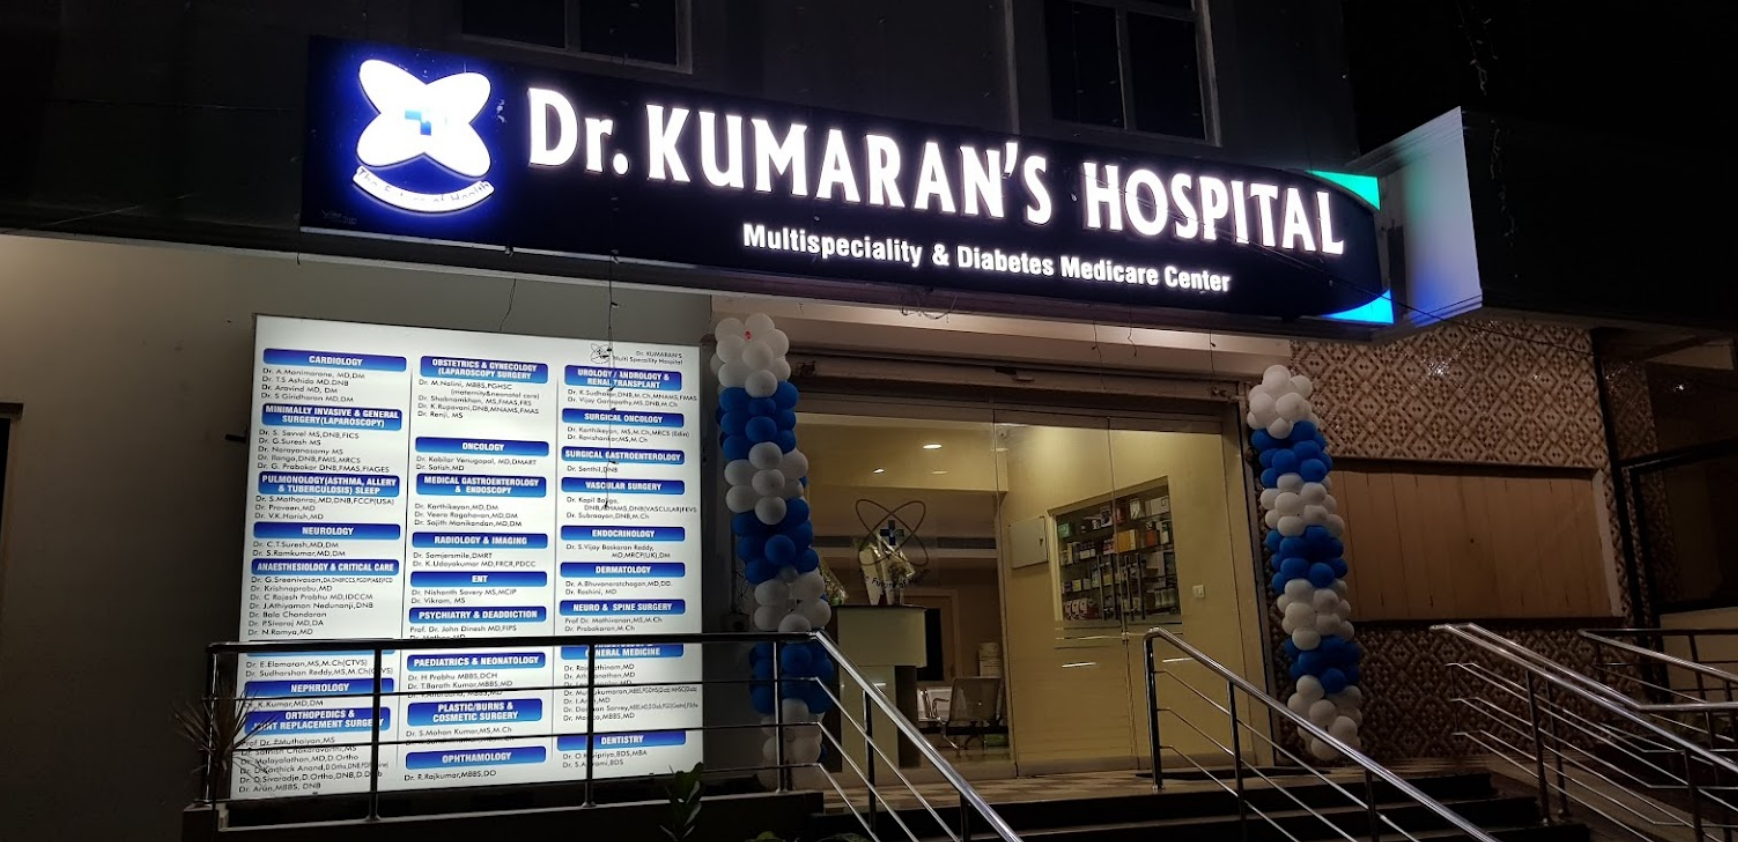 Dr. Kumaran's Hospital